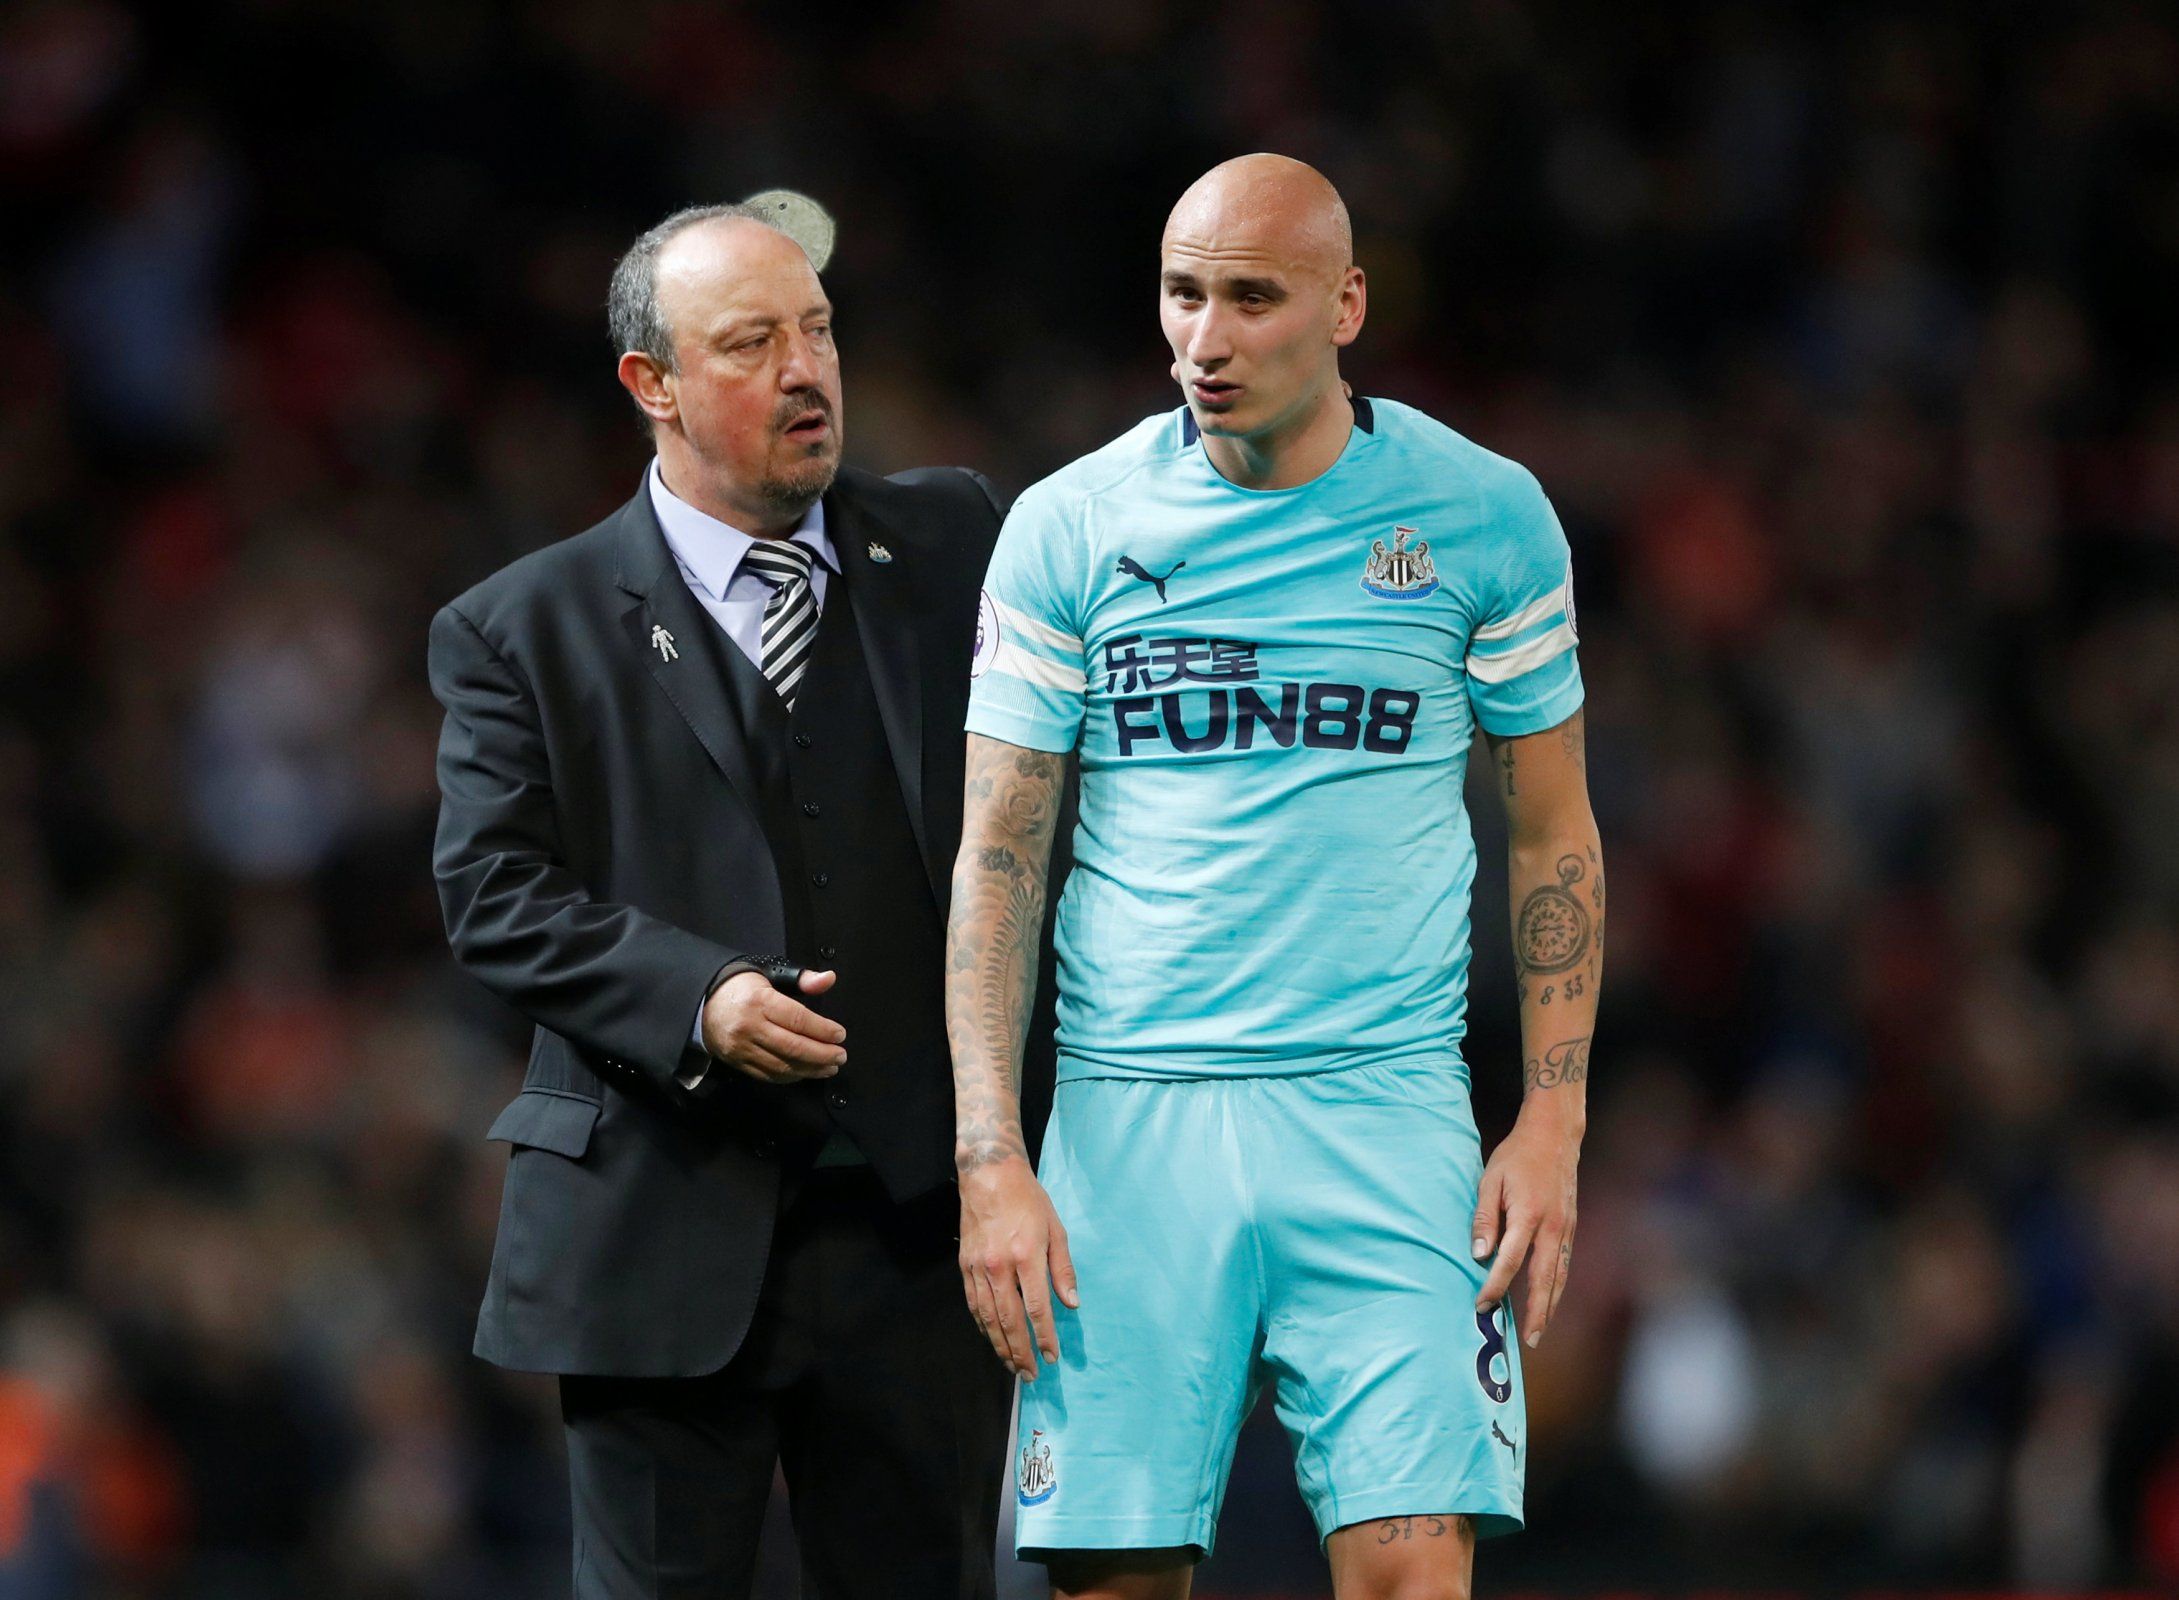 Rafa Benitez gives instructions to Jonjo Shelvey